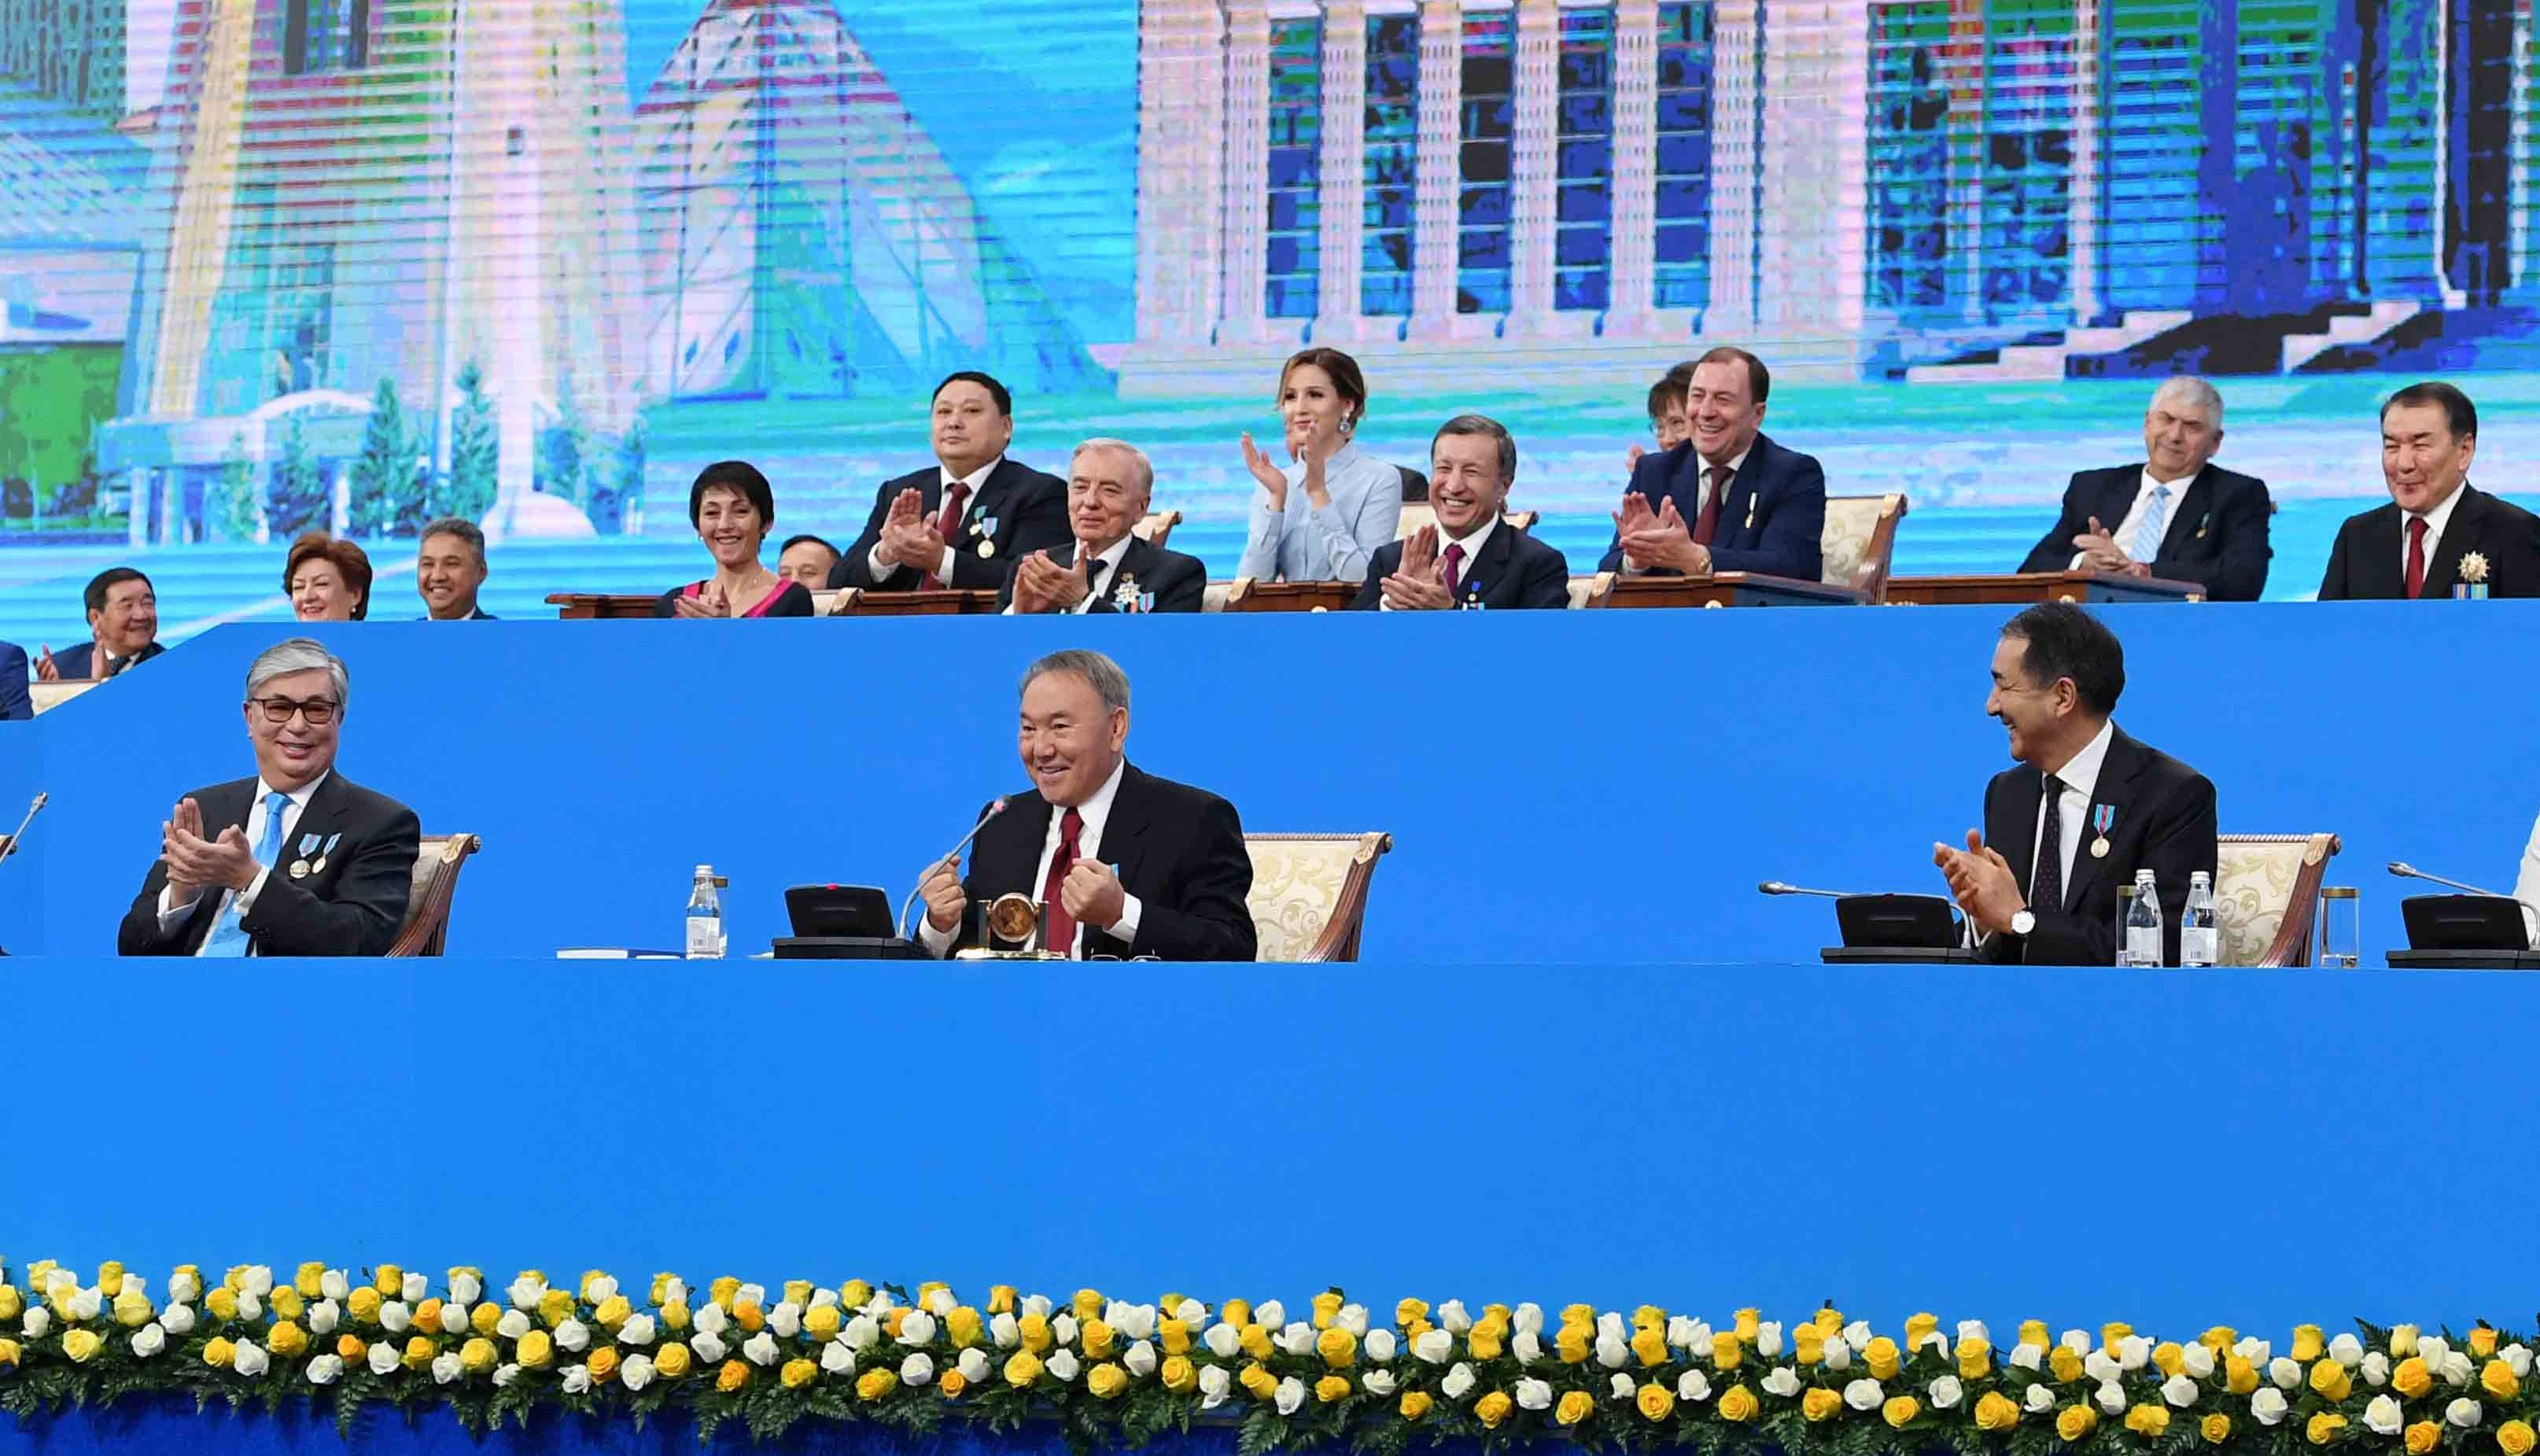 Фото 25 летие независимости Казахстана Назарбаев.